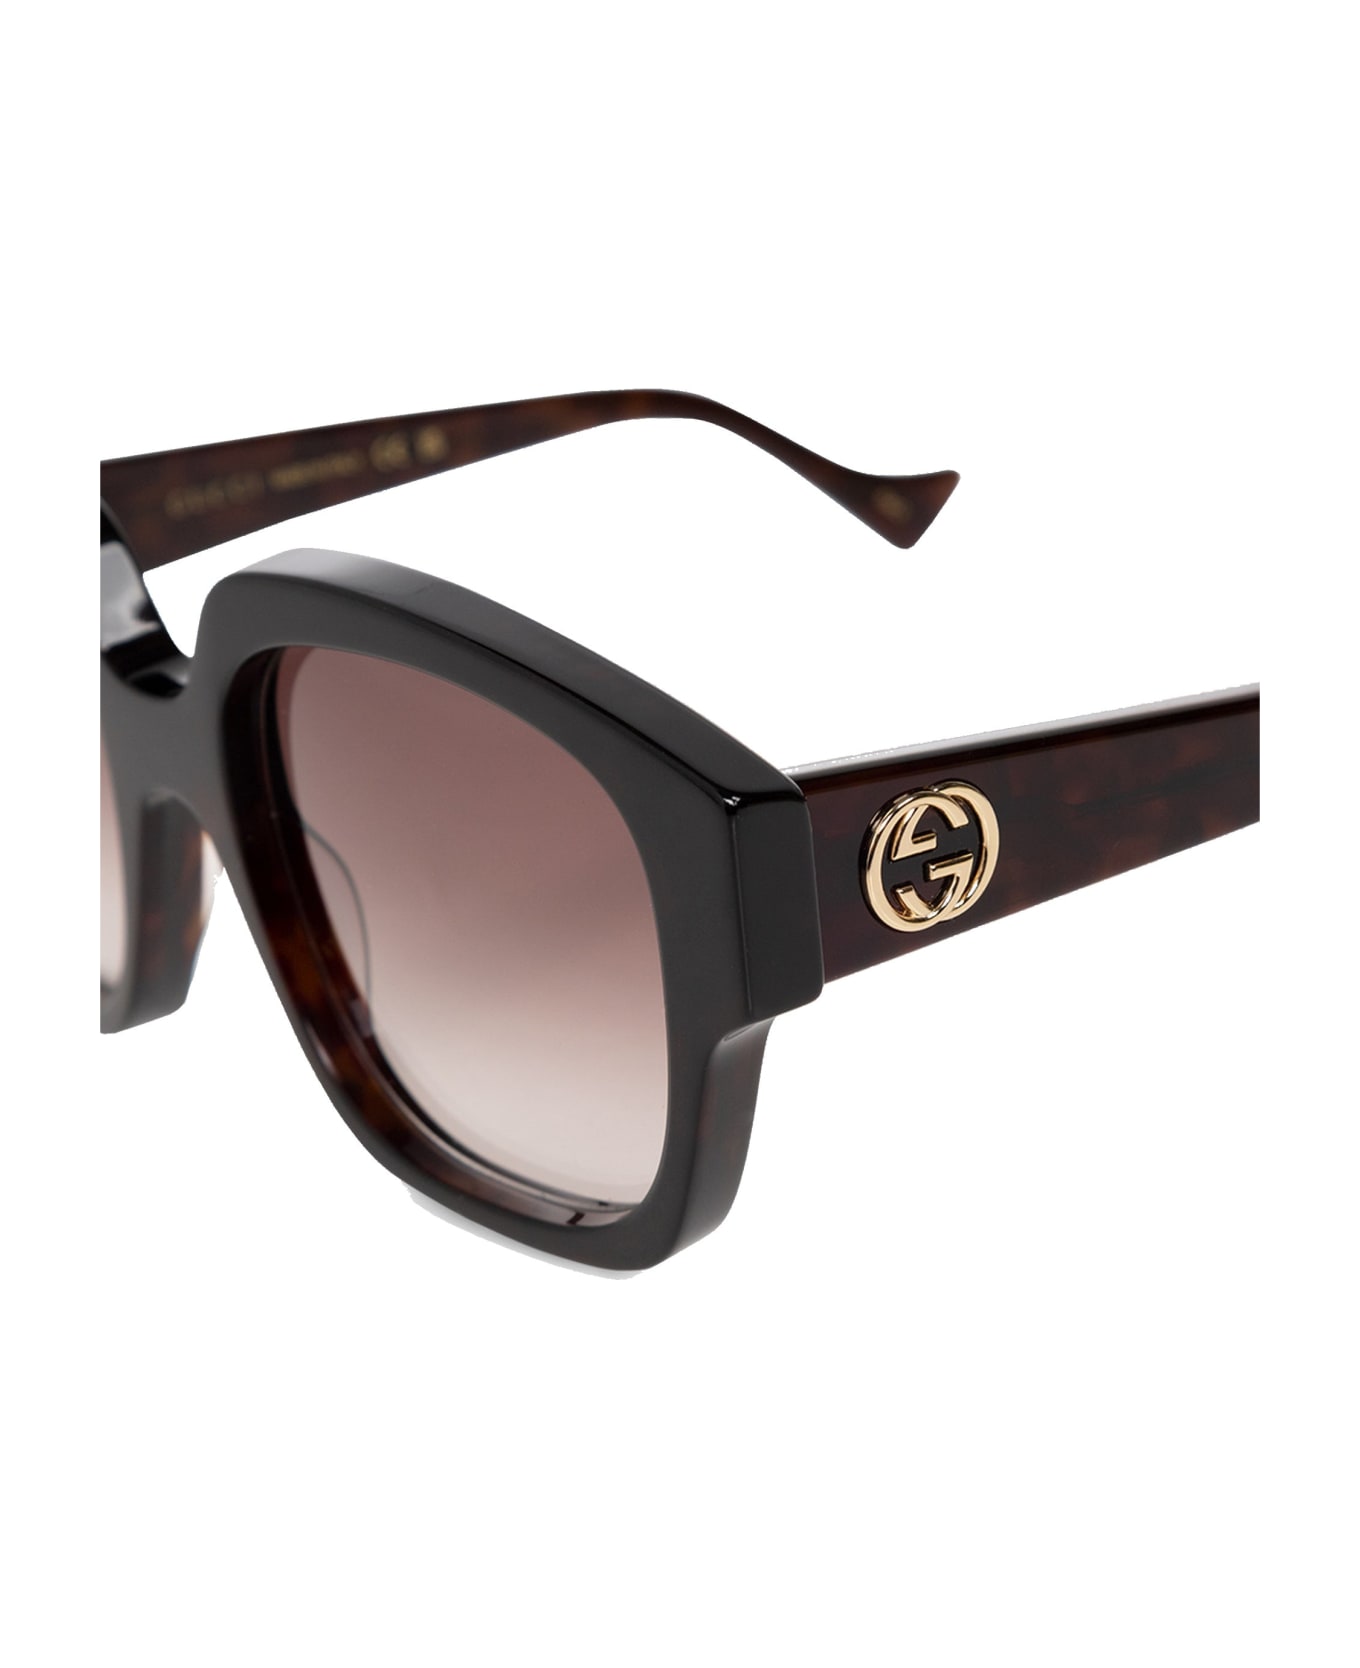 Gucci Eyewear Square Frame Sunglasses - Brown